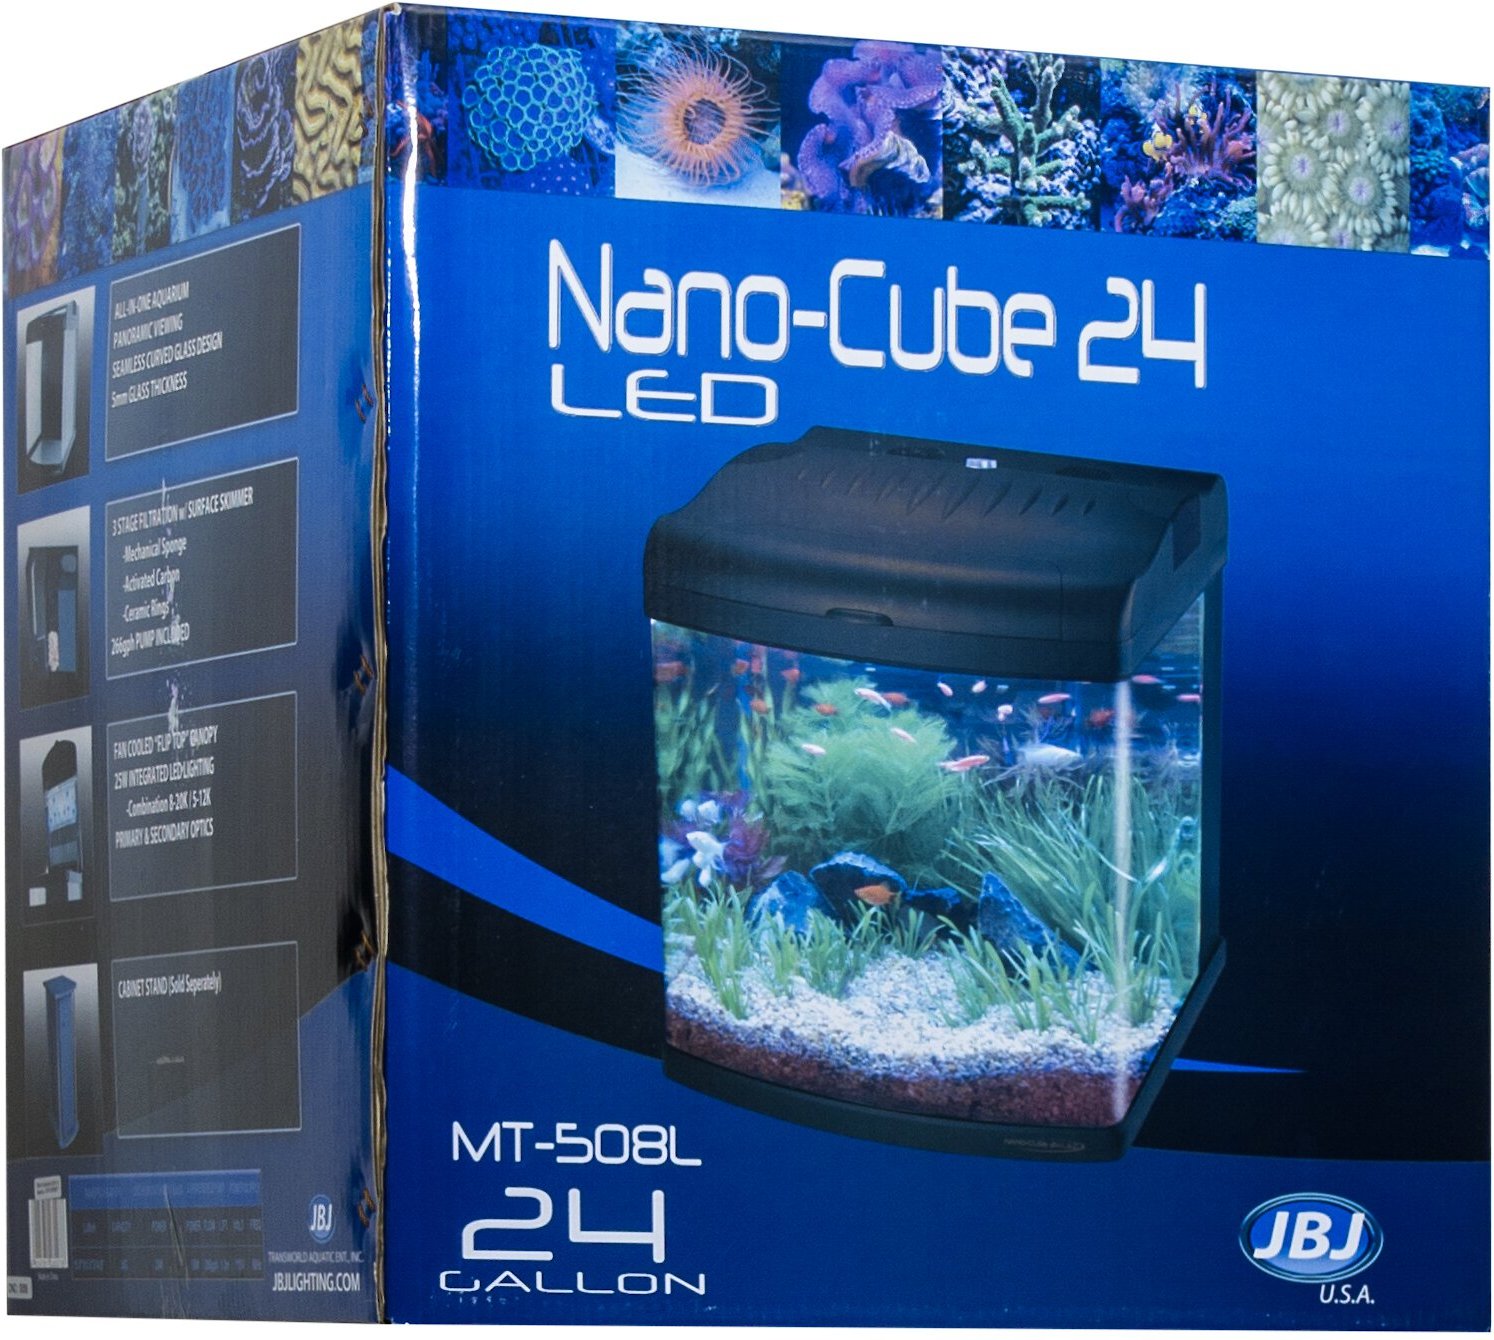 Danser haar spleet JBJ AQUARIUM Nano-Cube 24 LED Fish Aquarium, 24-gal - Chewy.com